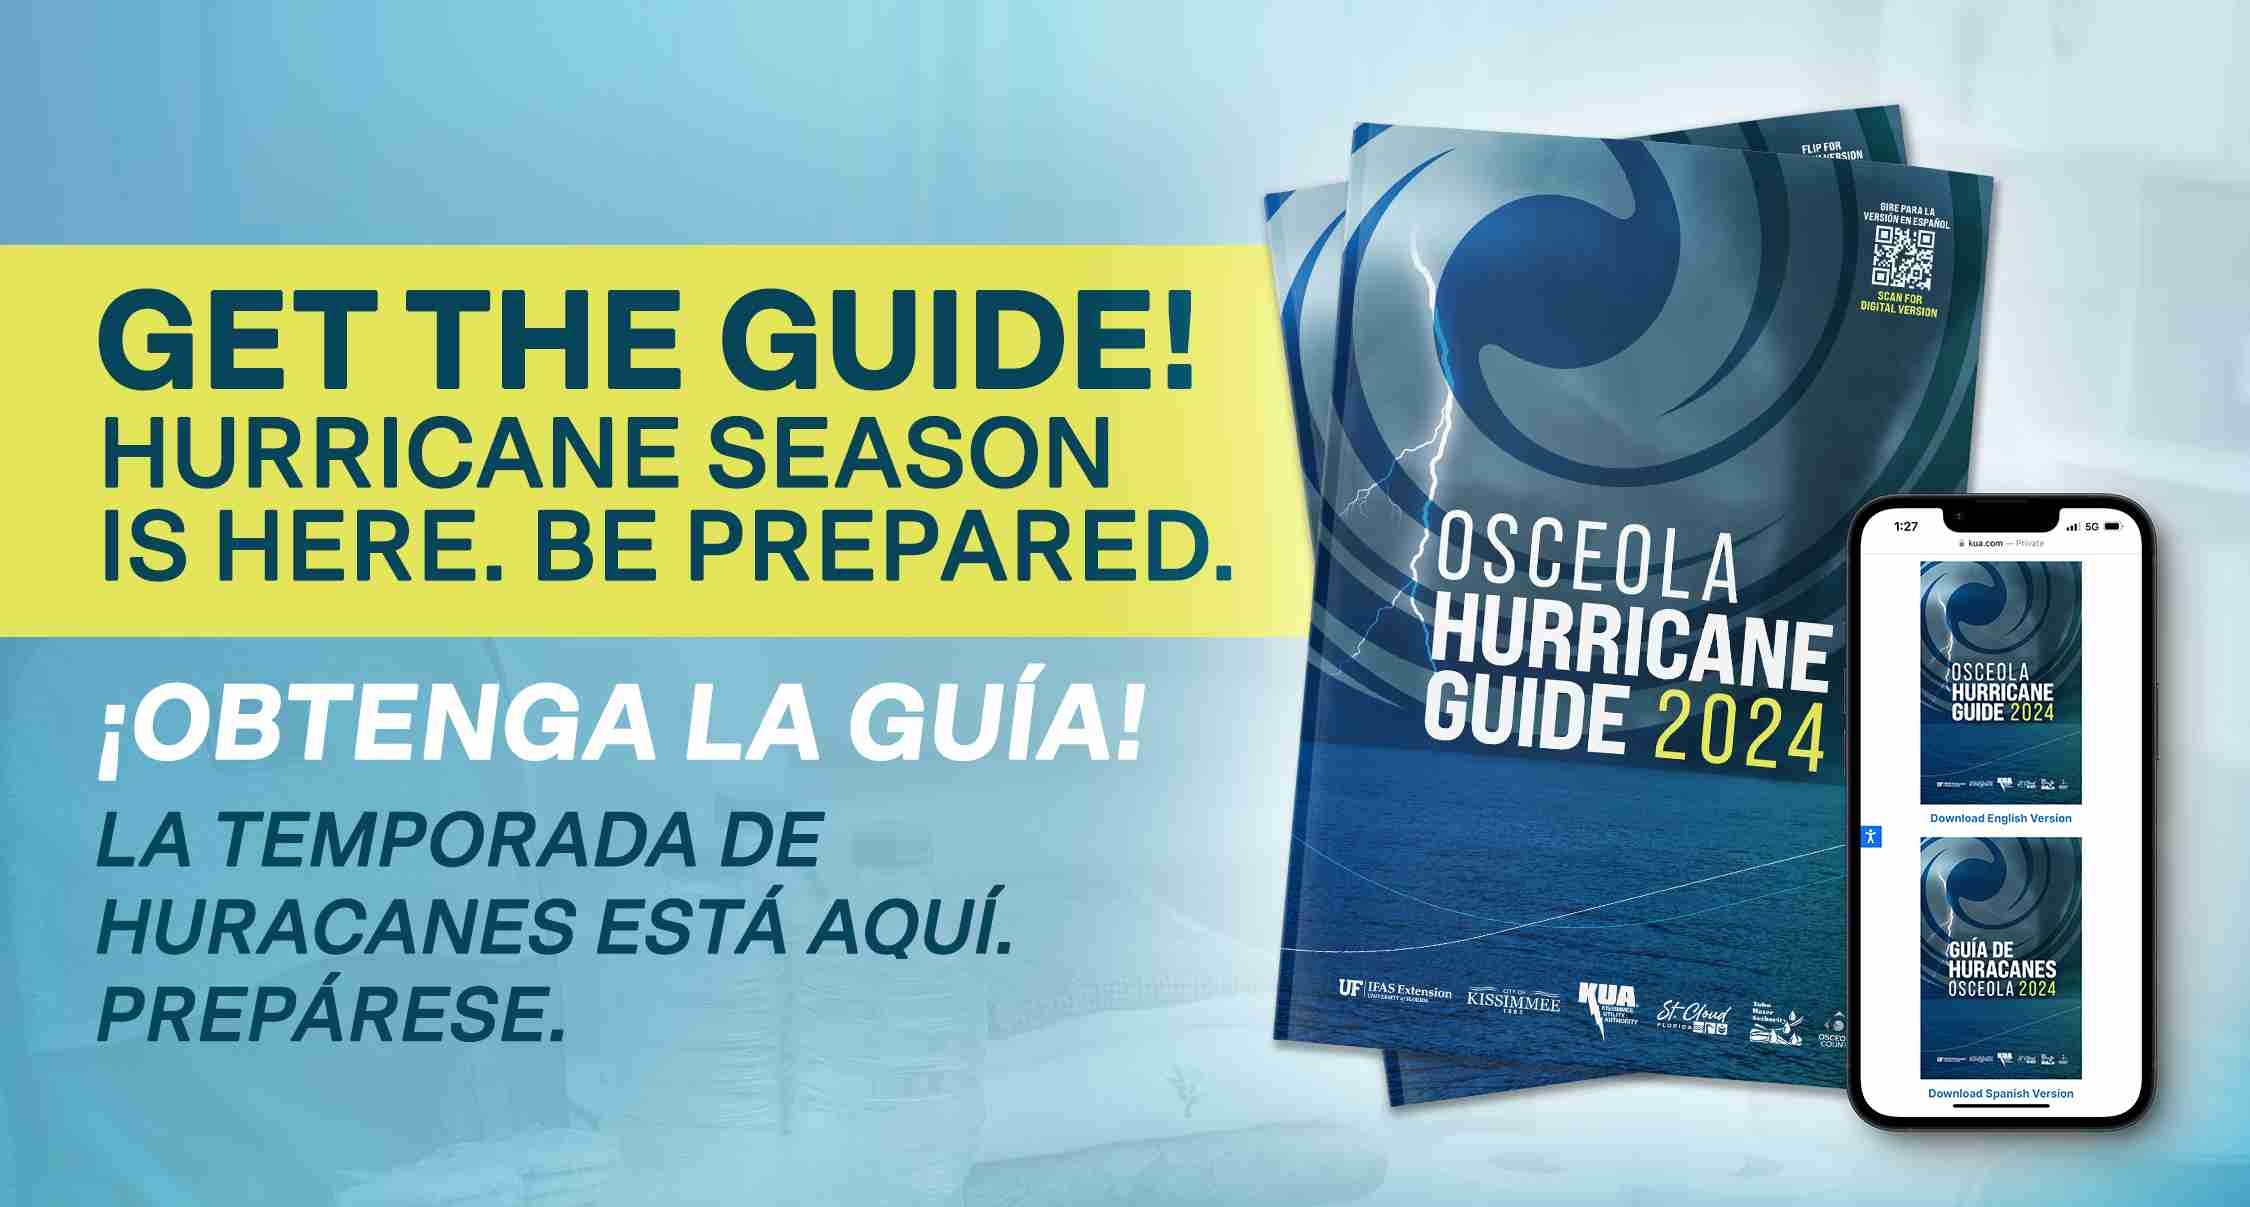 Get the Guide! Hurricane season is here!